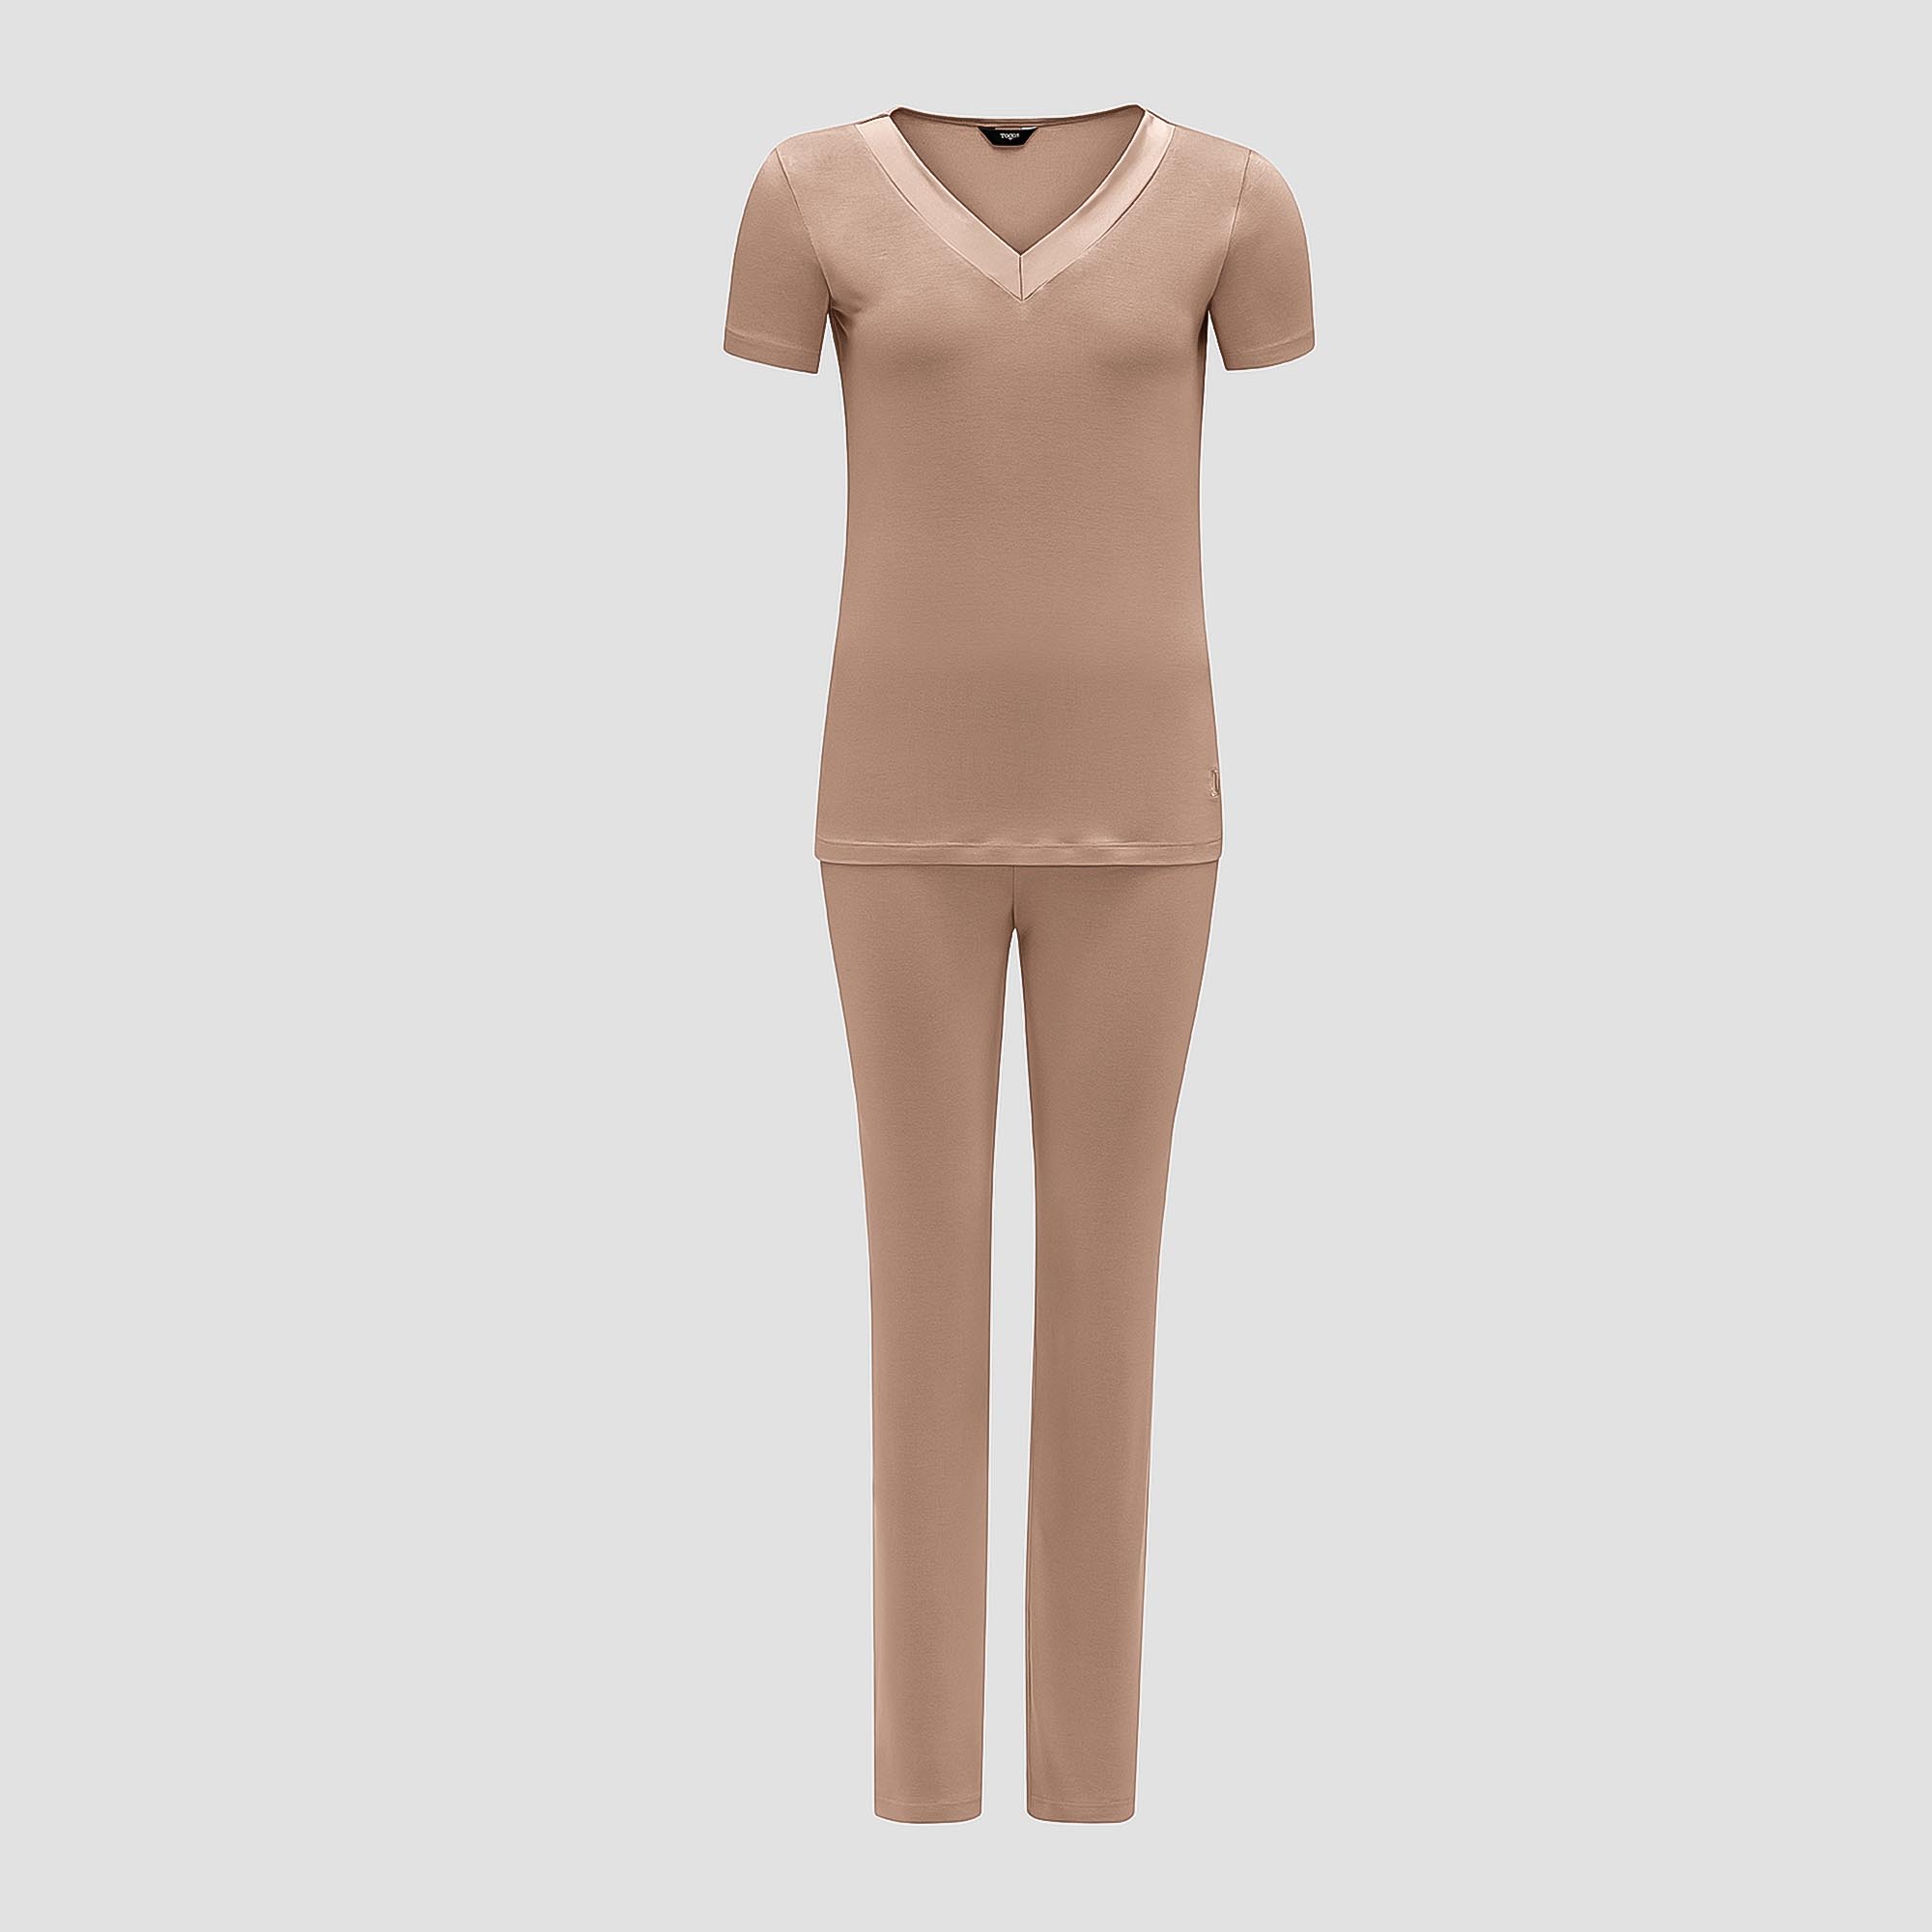 Пижама Togas Ингелла розово-бежевая женская XXL(52) 2 предмета пижама халат брюки